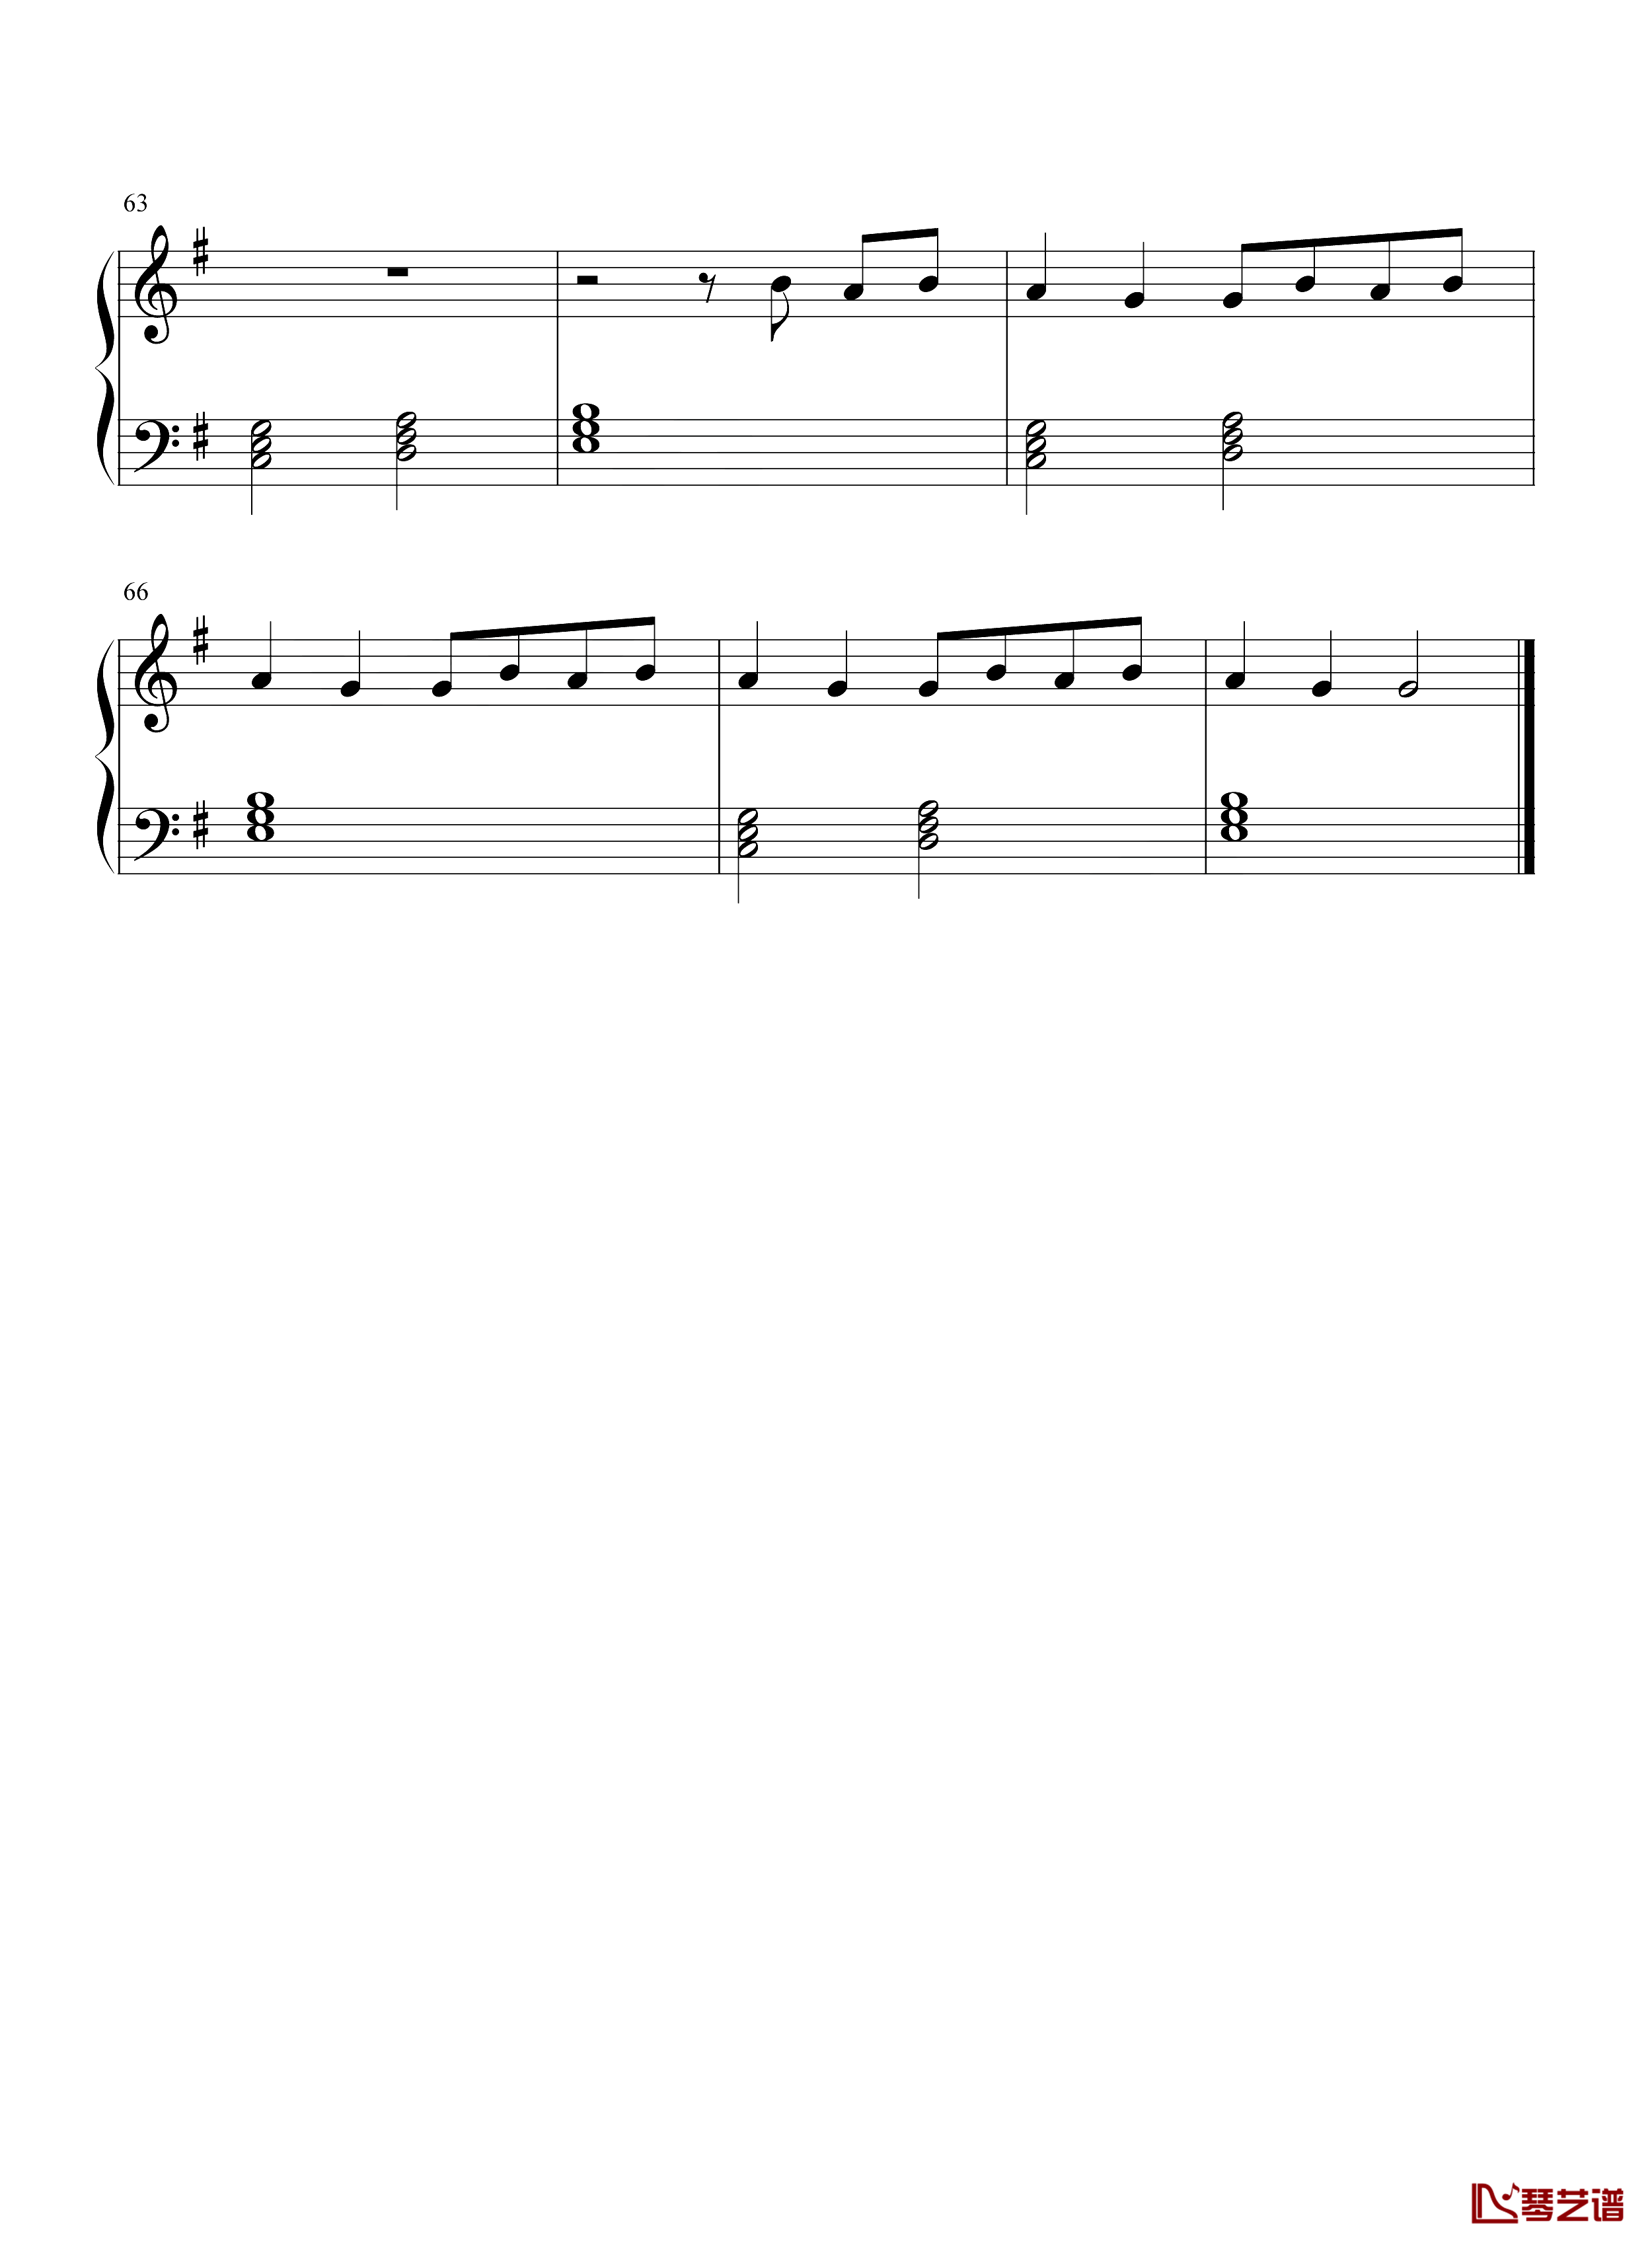 Envolver钢琴谱-Anitta-YouTube全球音乐榜前10名之一歌曲5